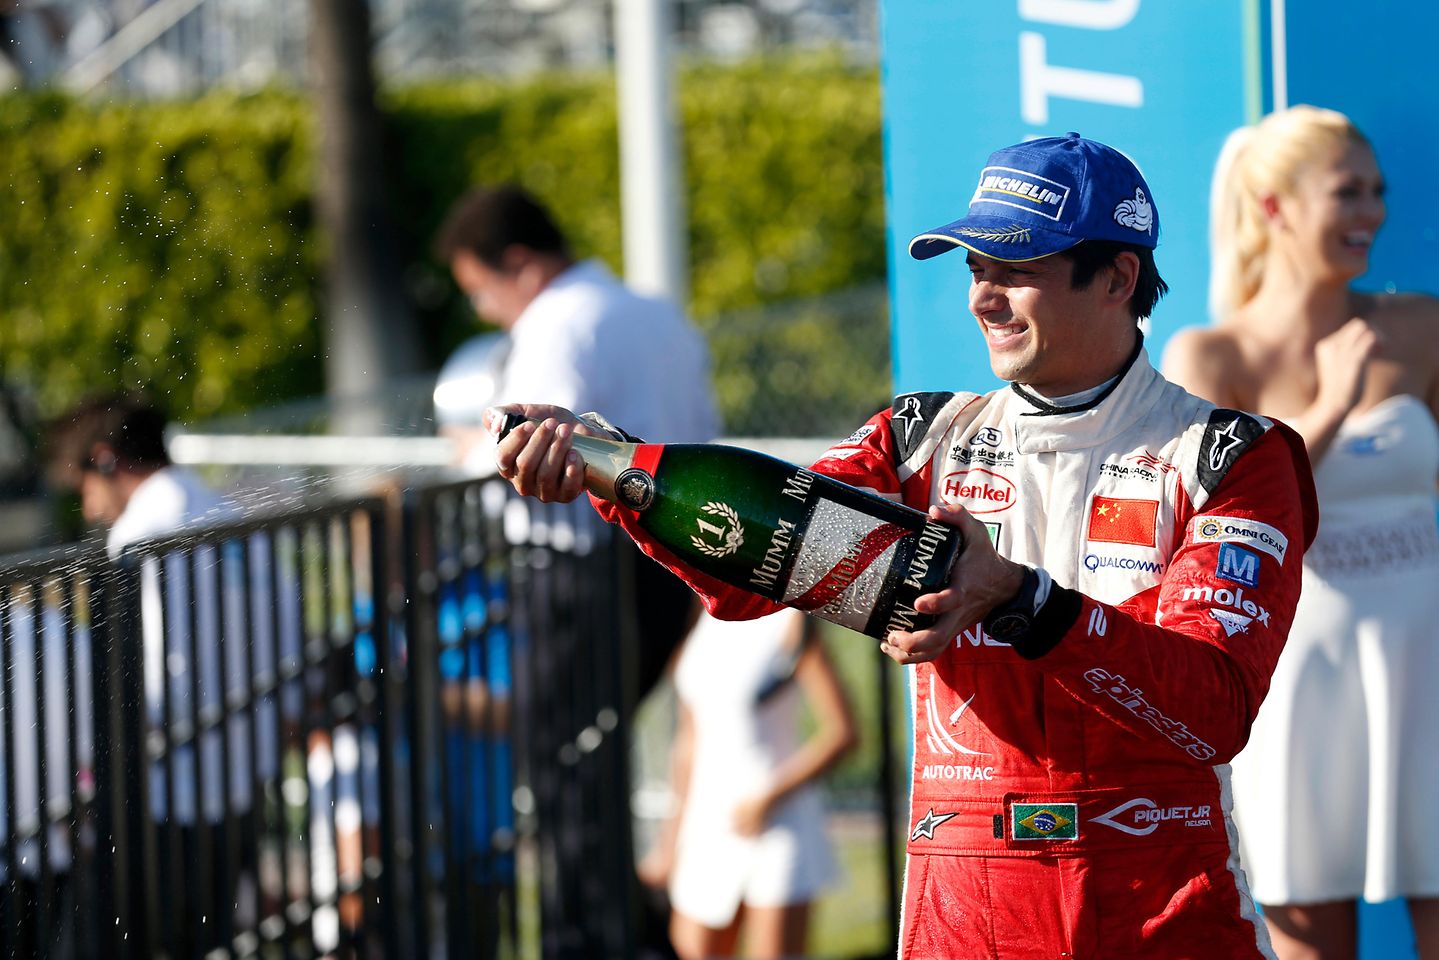 
Following a third place finish in Argentina, team pilot Nelson Piquet Jr. won the most recent race in Long Beach, USA.